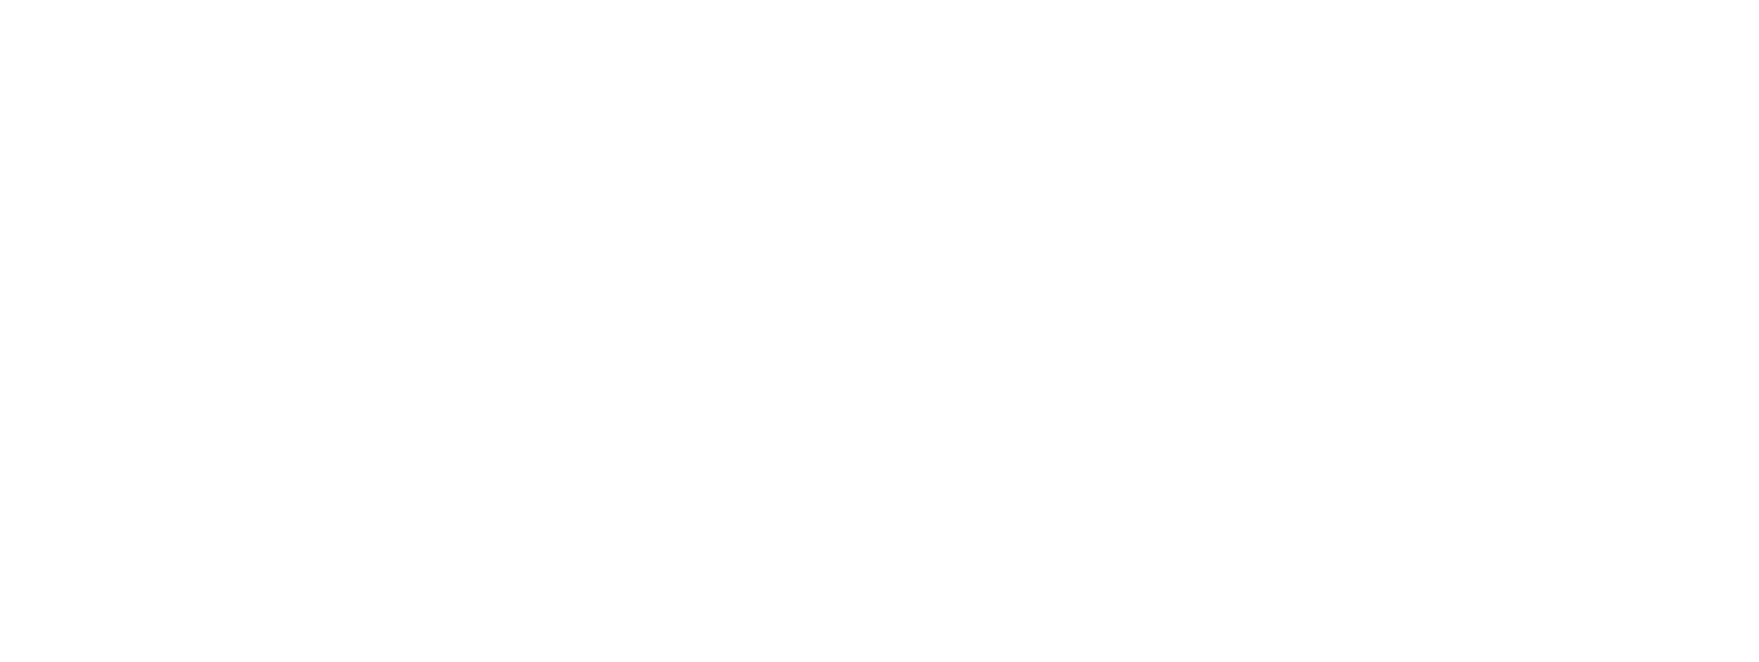 State Government of Victoria logo bottom